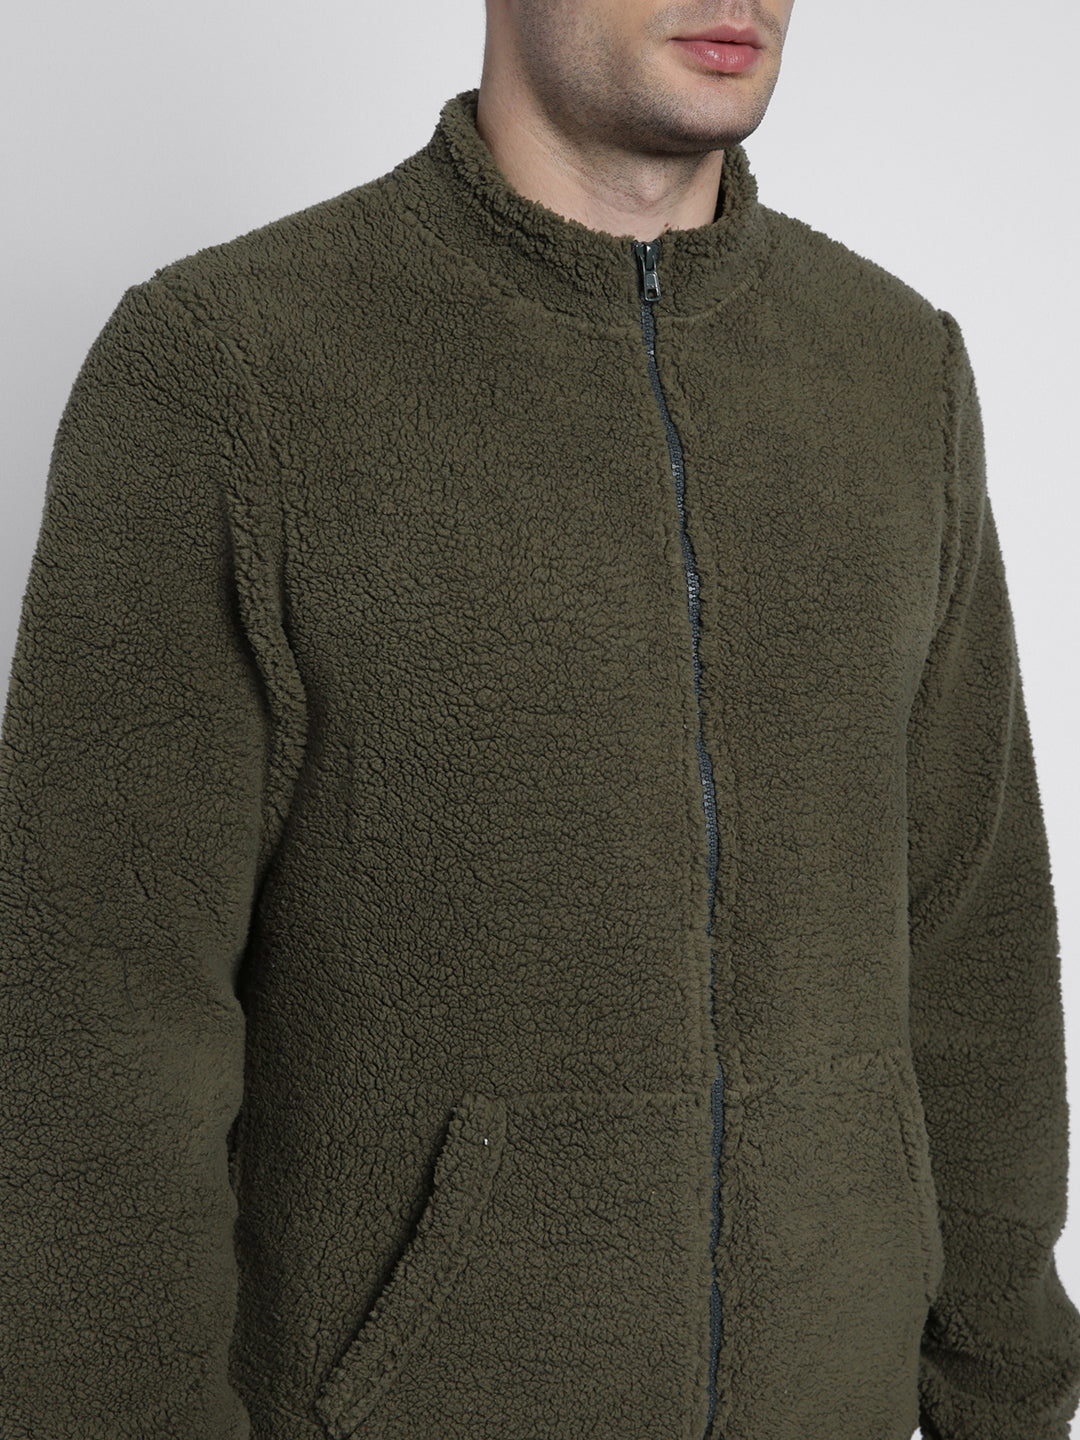 Dennis Lingo Men's Olive Solid Fleece High Neck Full Sleeve Light weight jacket Jackets